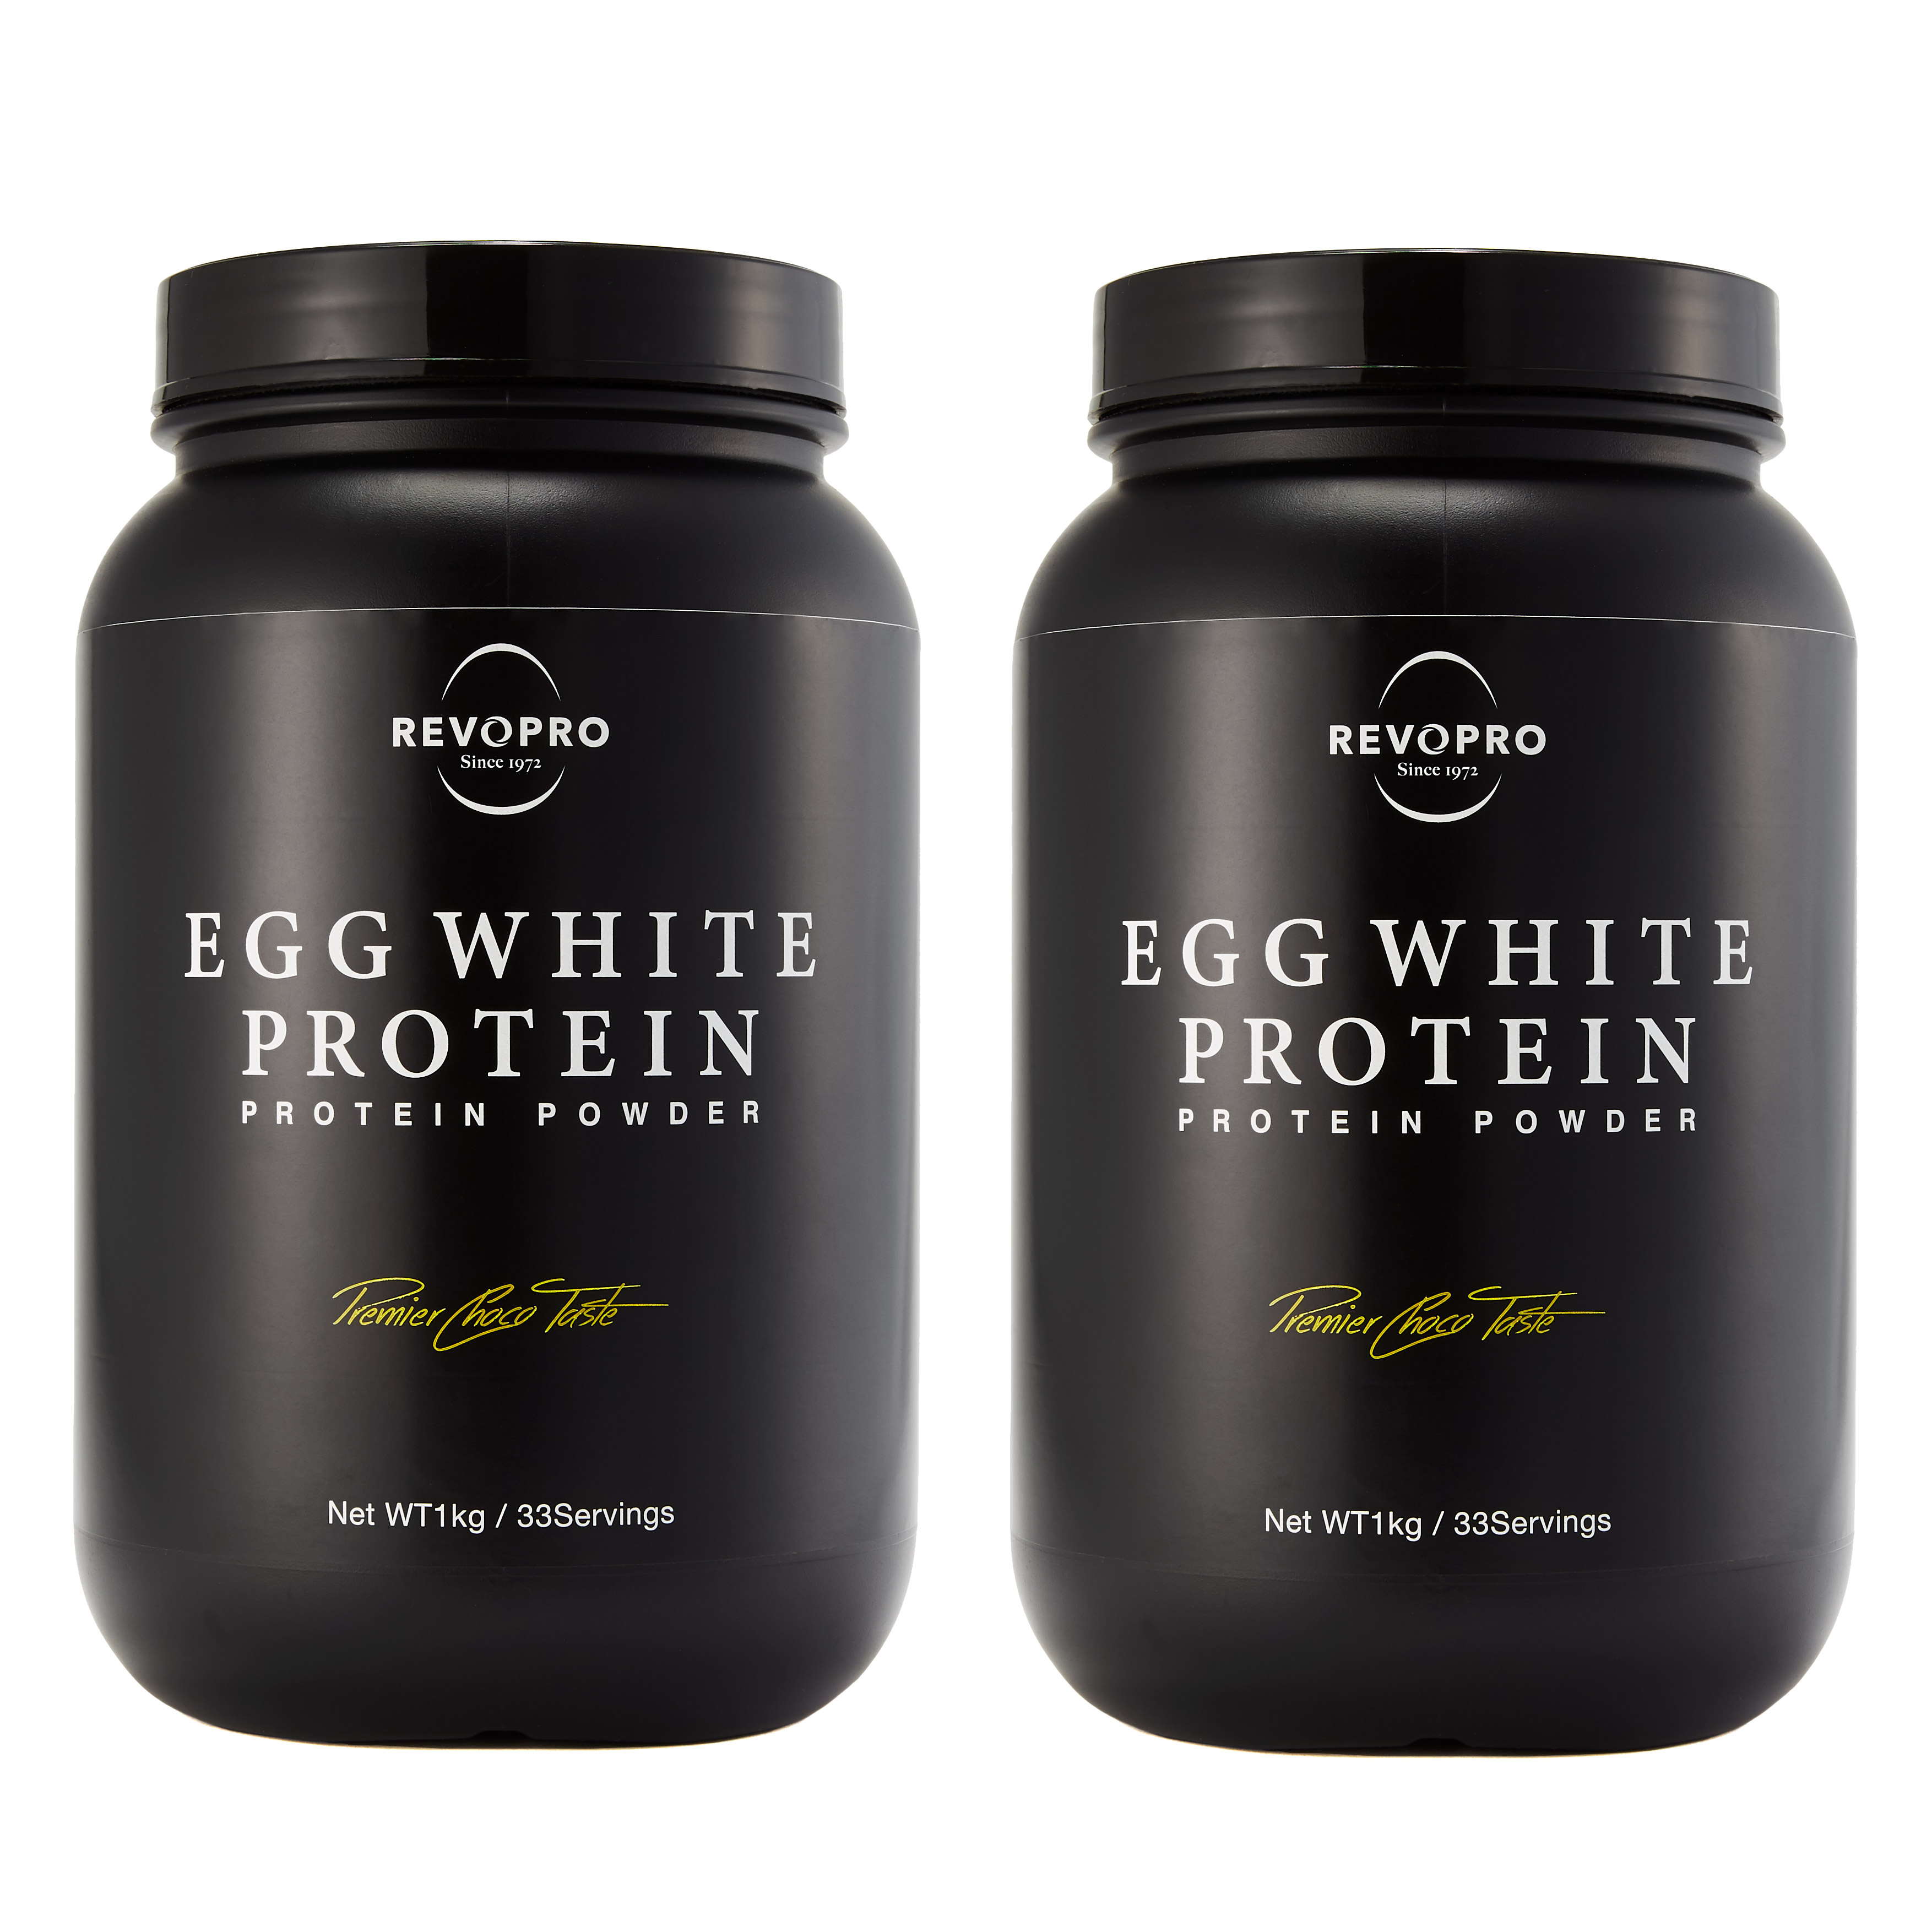 REVOPRO egg white protein